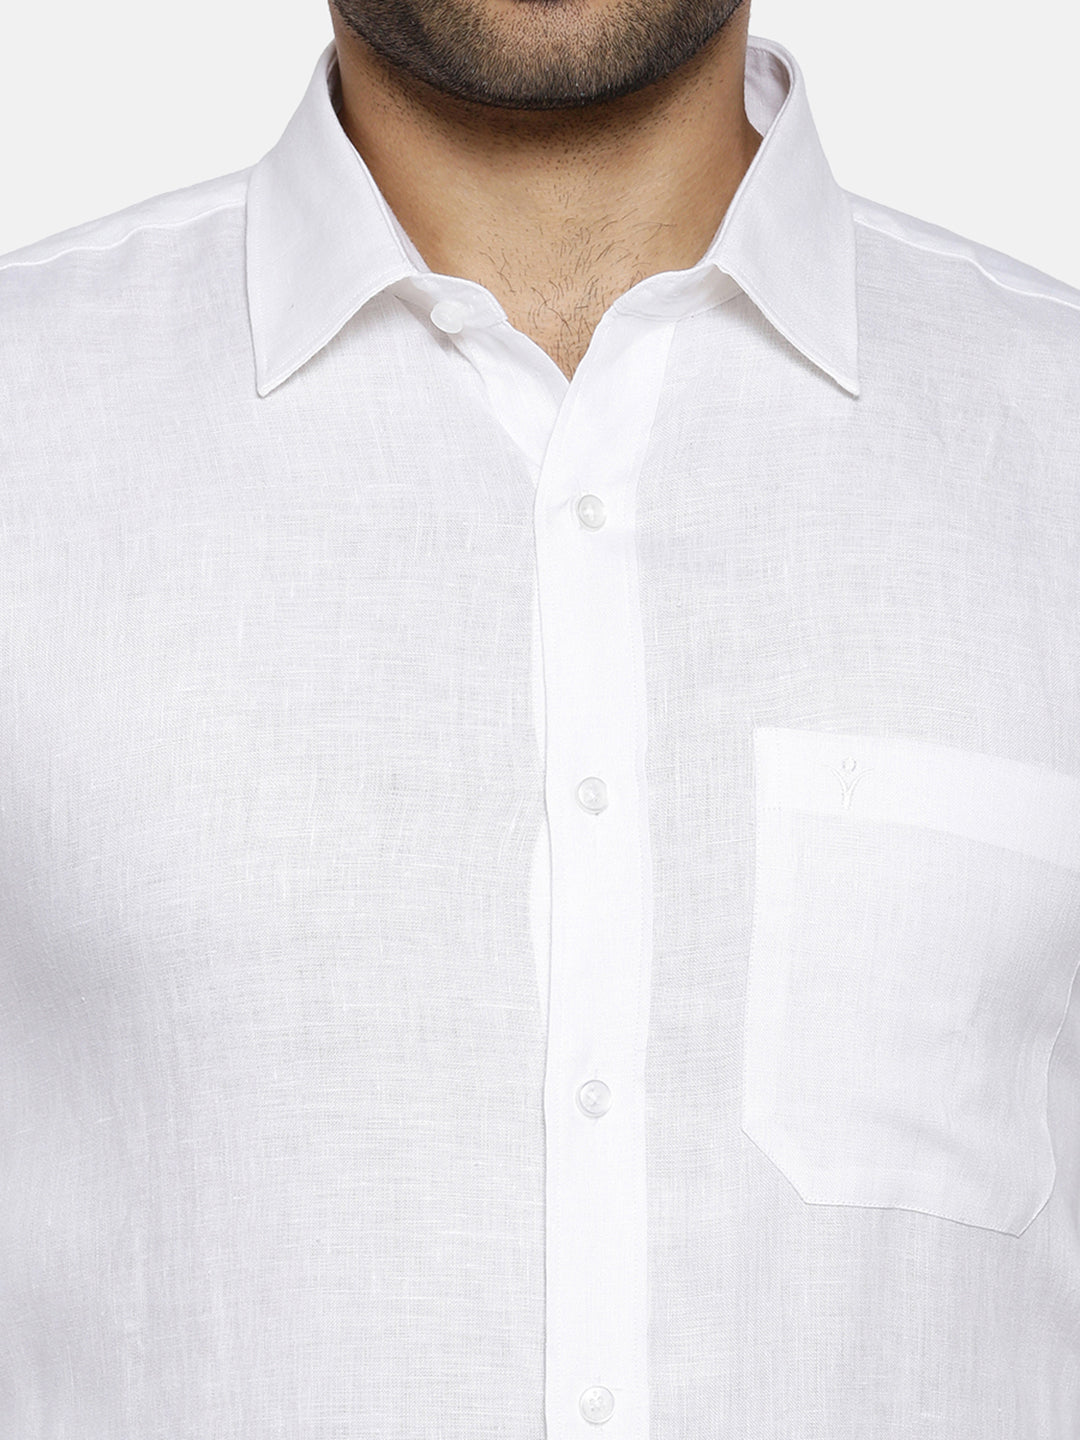 Mens Uniform Pure Linen White Shirt Full Sleeves-Zoom view